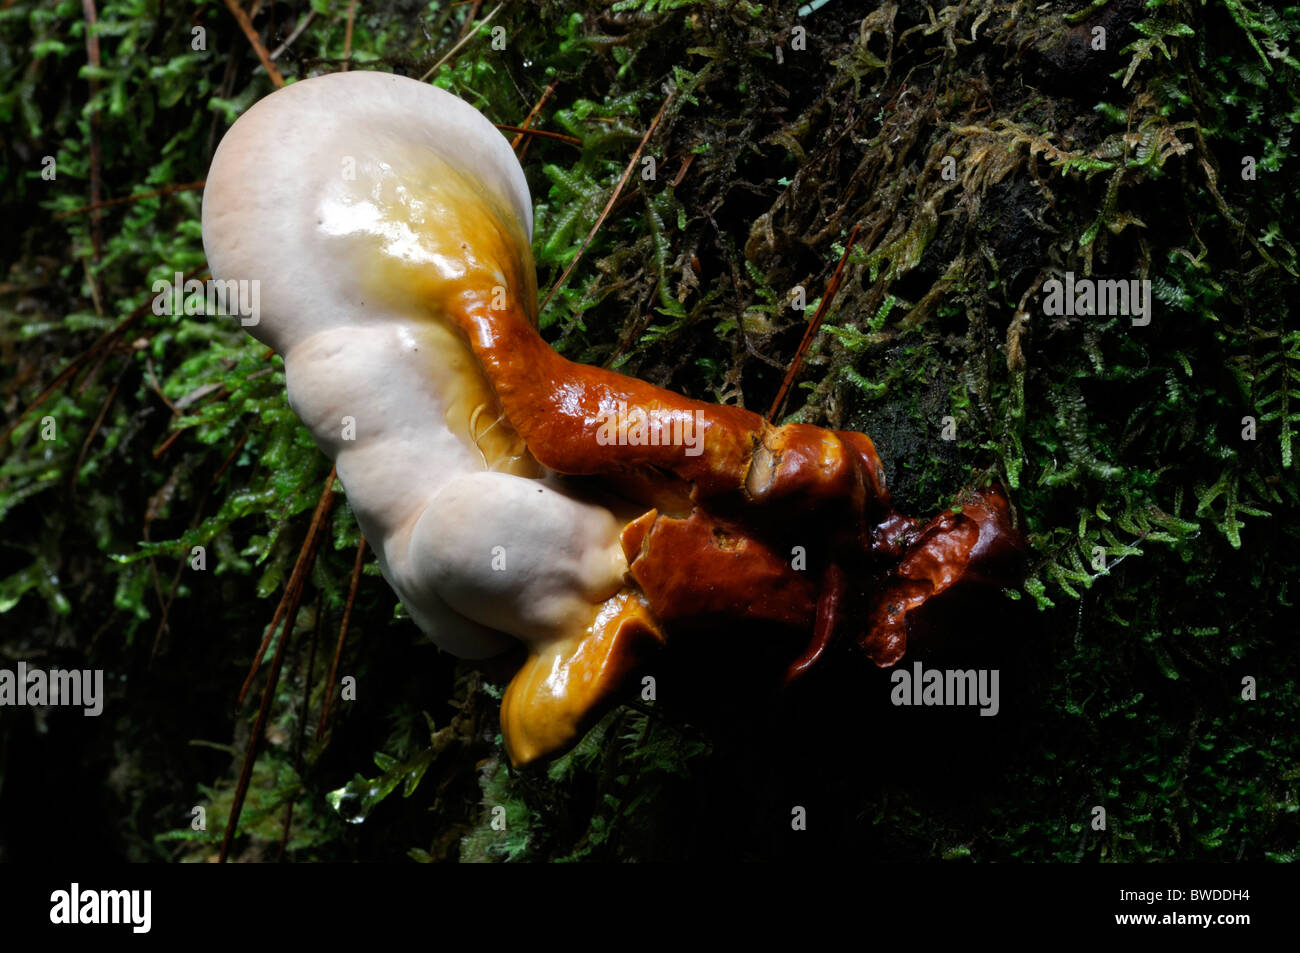 ear shape shaped bracket fungus grow growing parasite parasitic tree moss cover covered Stock Photo